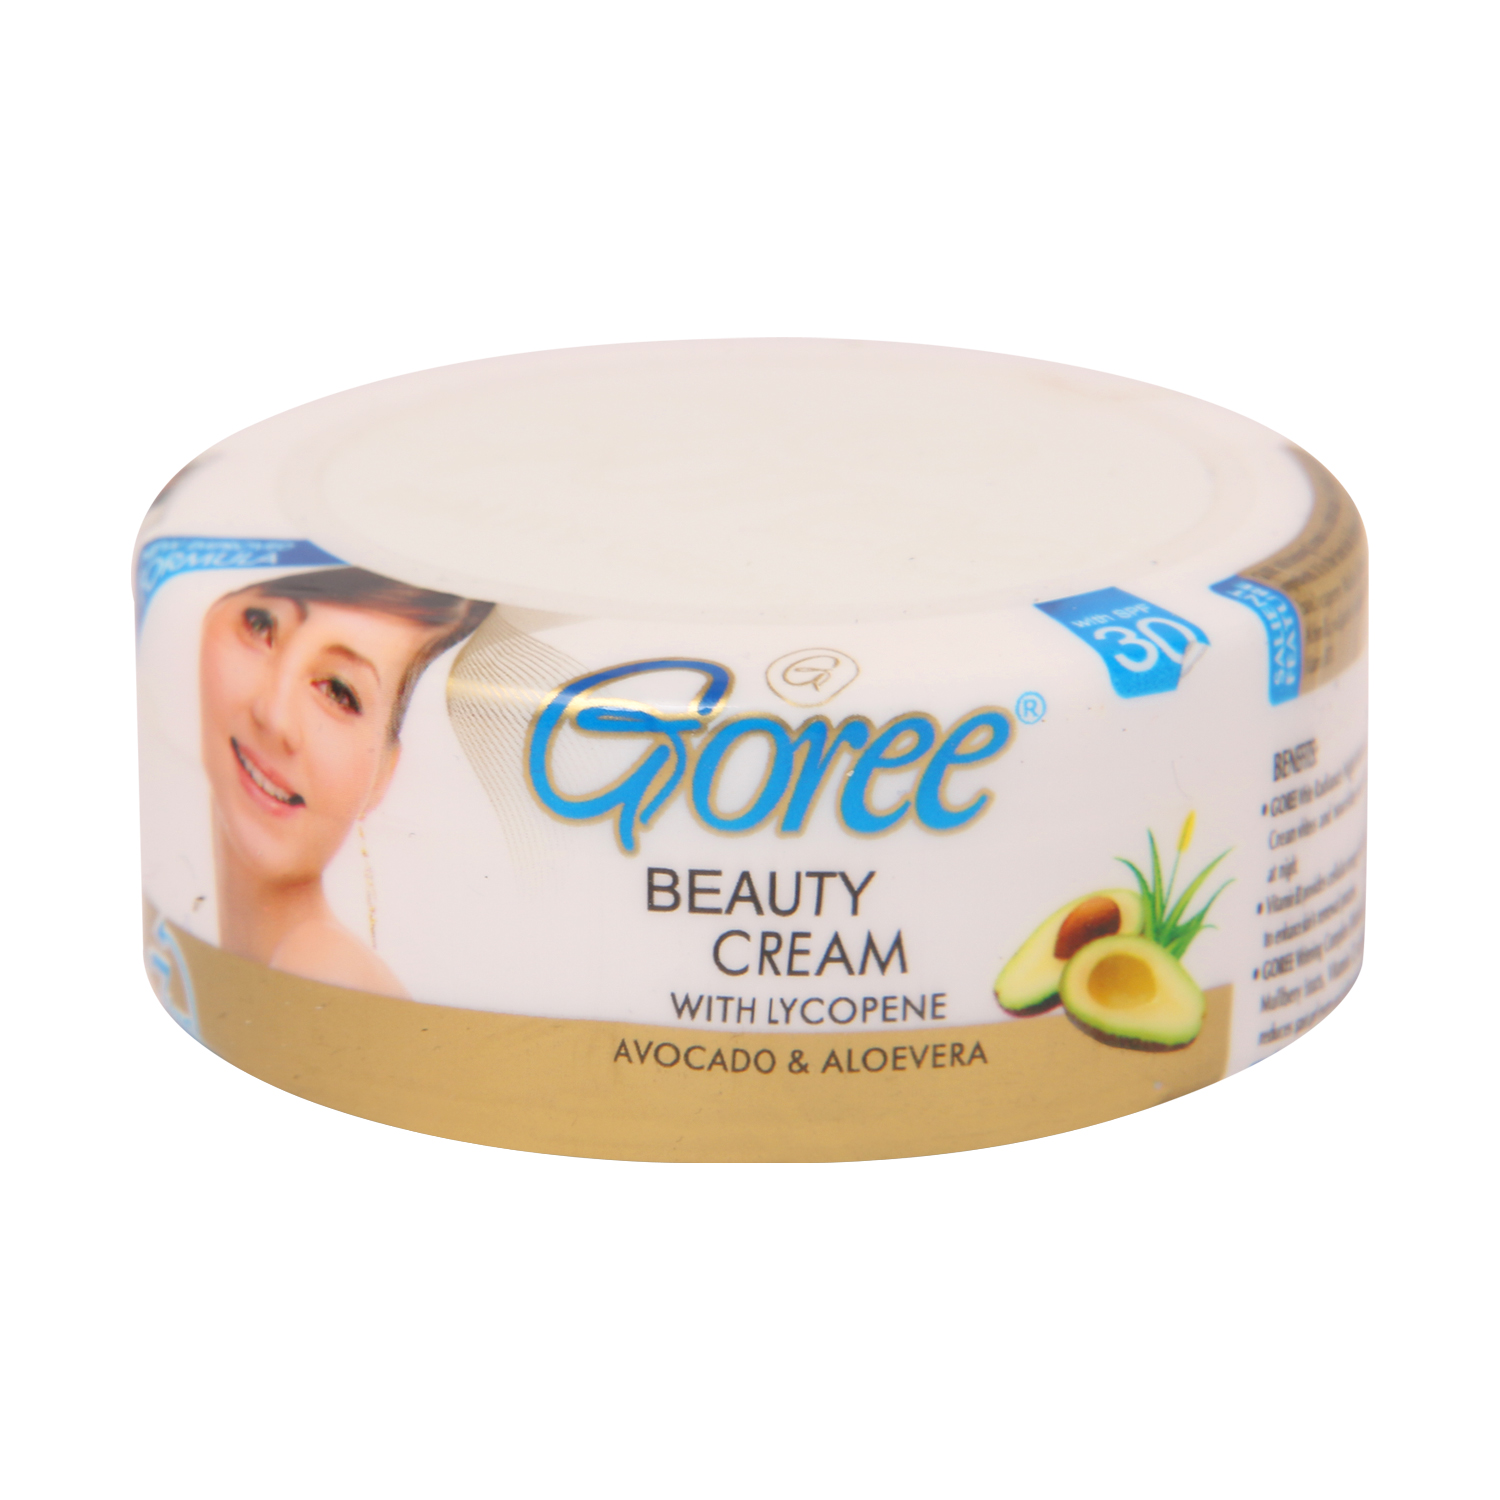 Goree beauty cream 美容クリーム 10 pieces - スキンケア/基礎化粧品